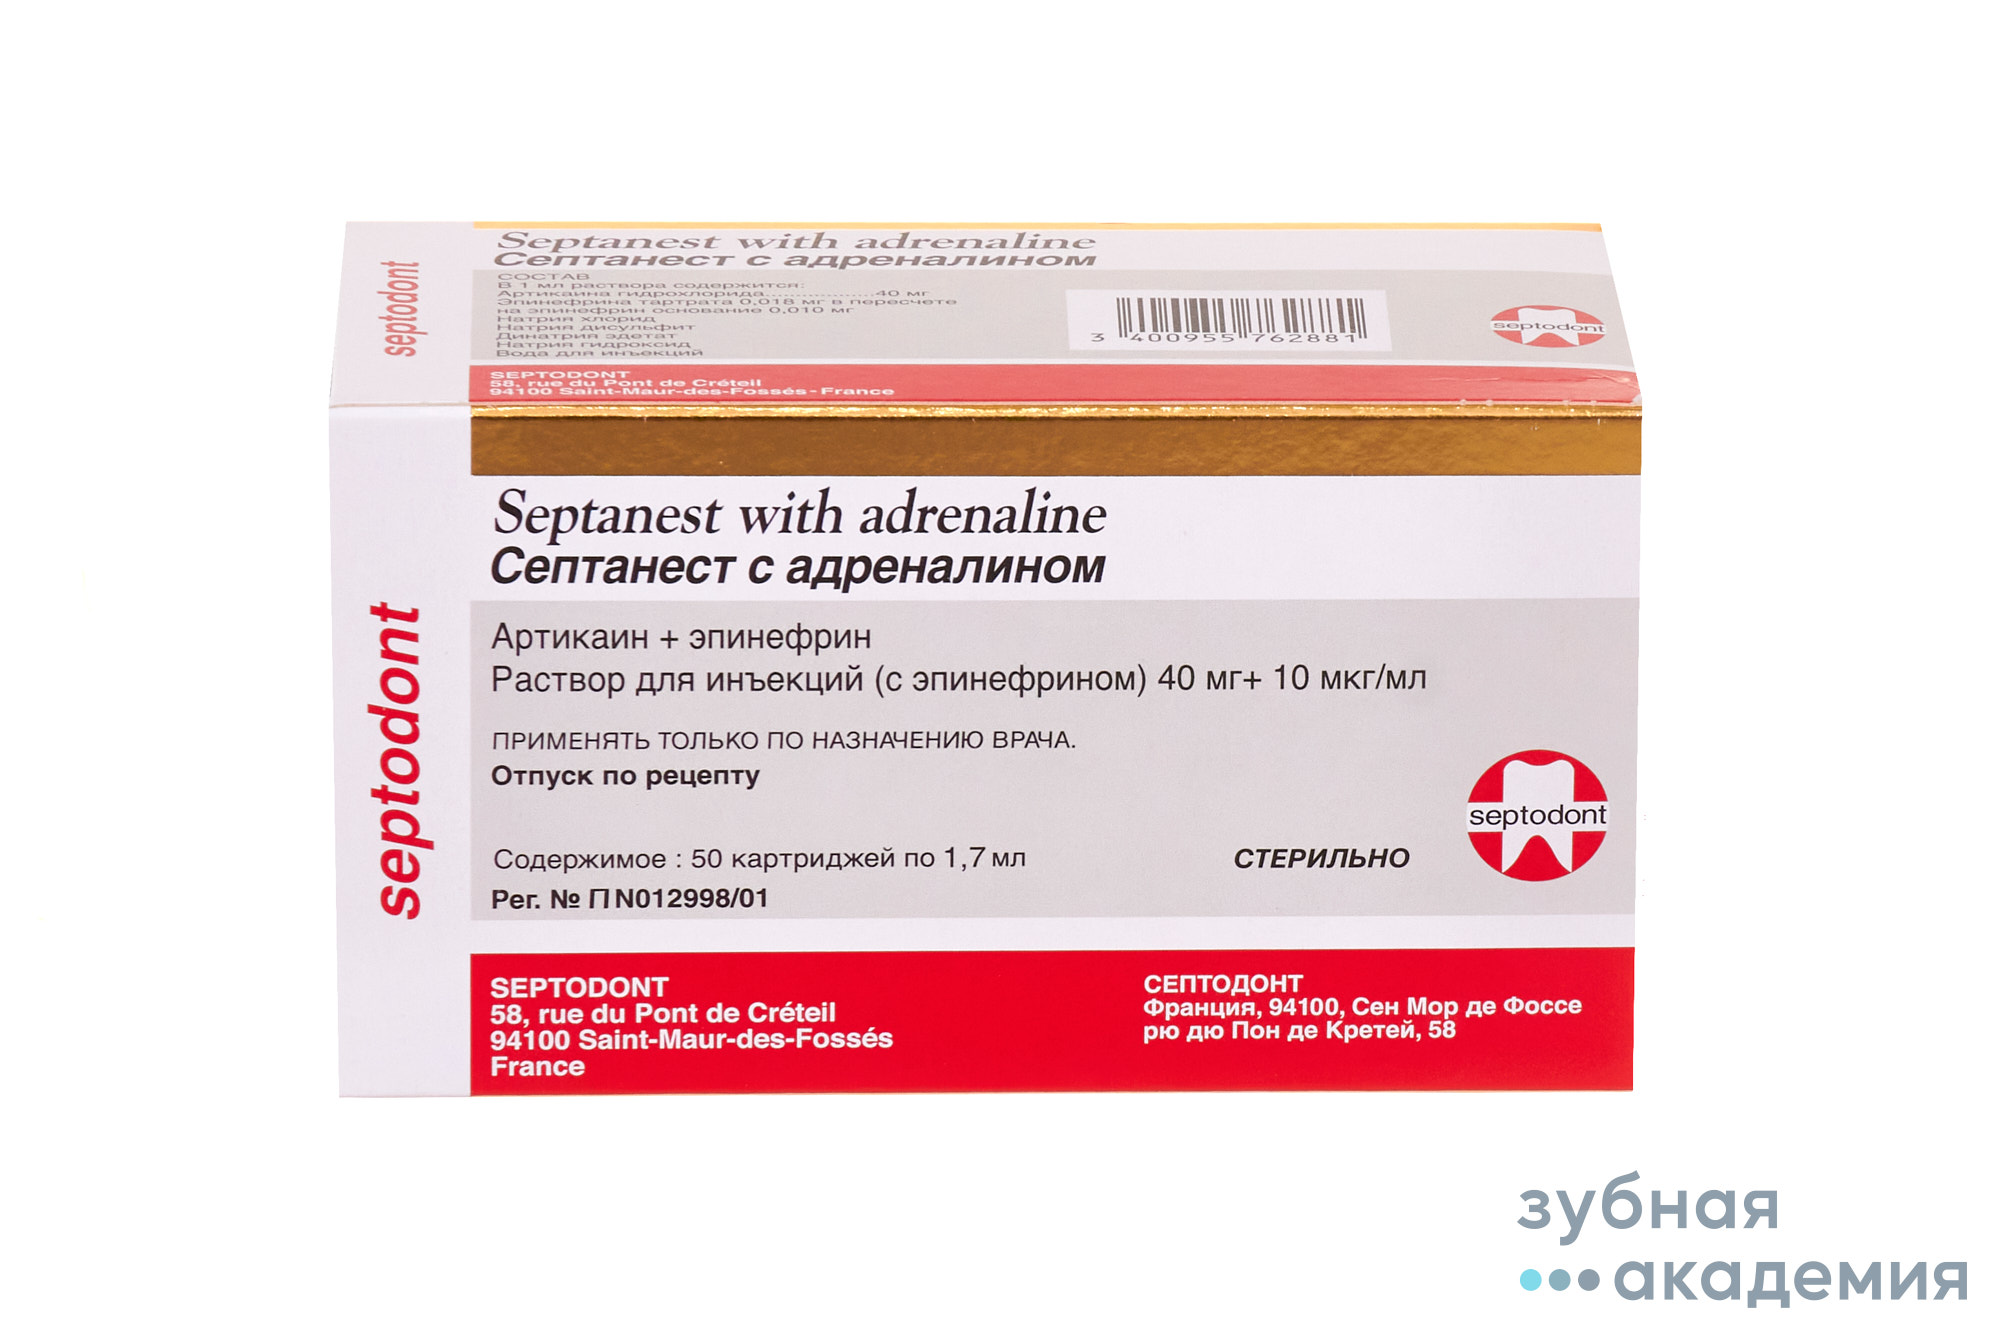 Septanest / Септанест анестезия с адреналином 1:100 000 (50 х 1,7 мл) /Septodont/ Франция